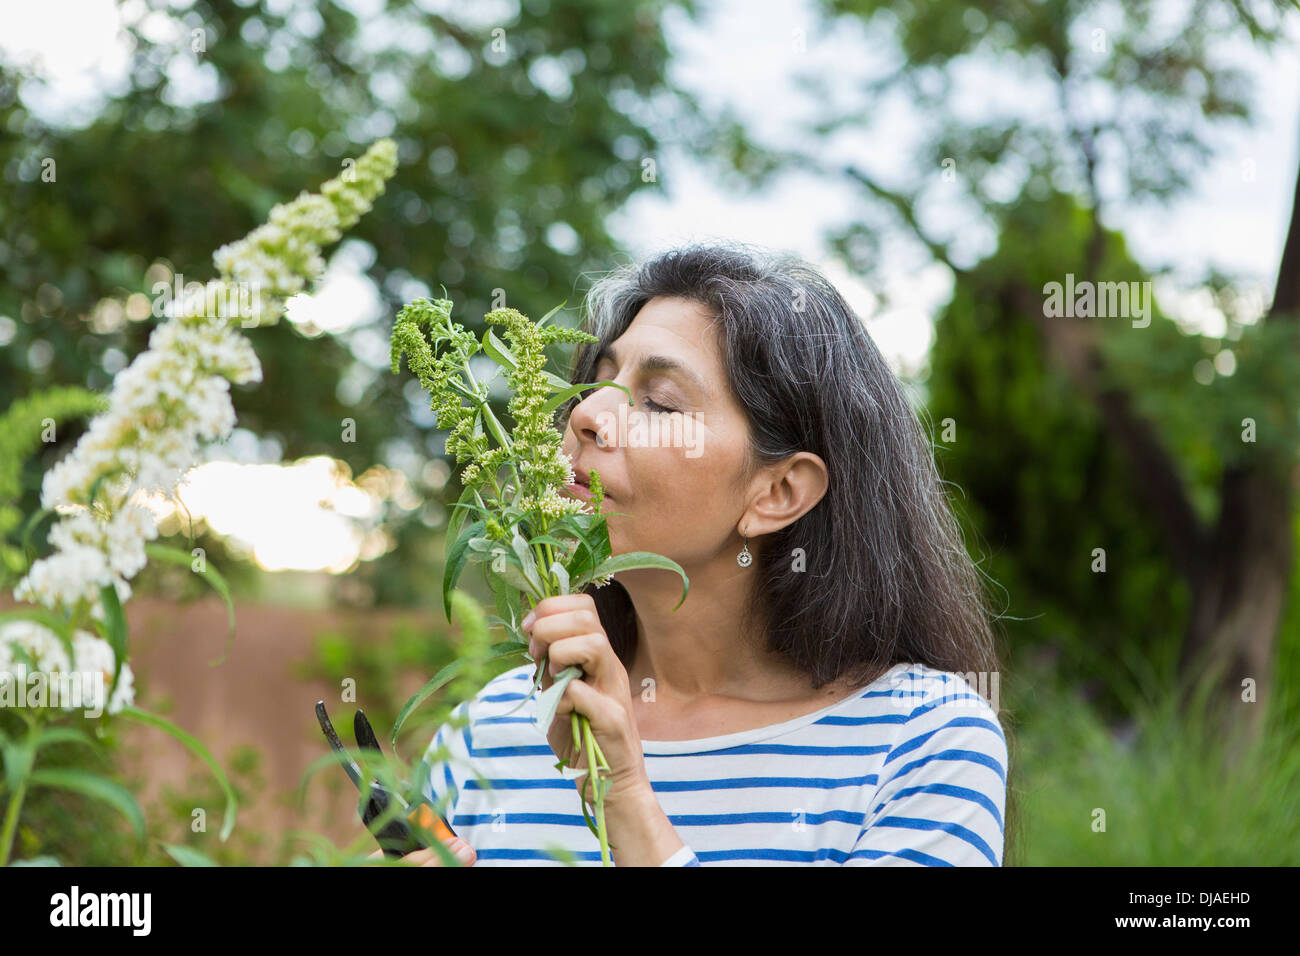 Hispanic woman smelling flowers in garden Stock Photo